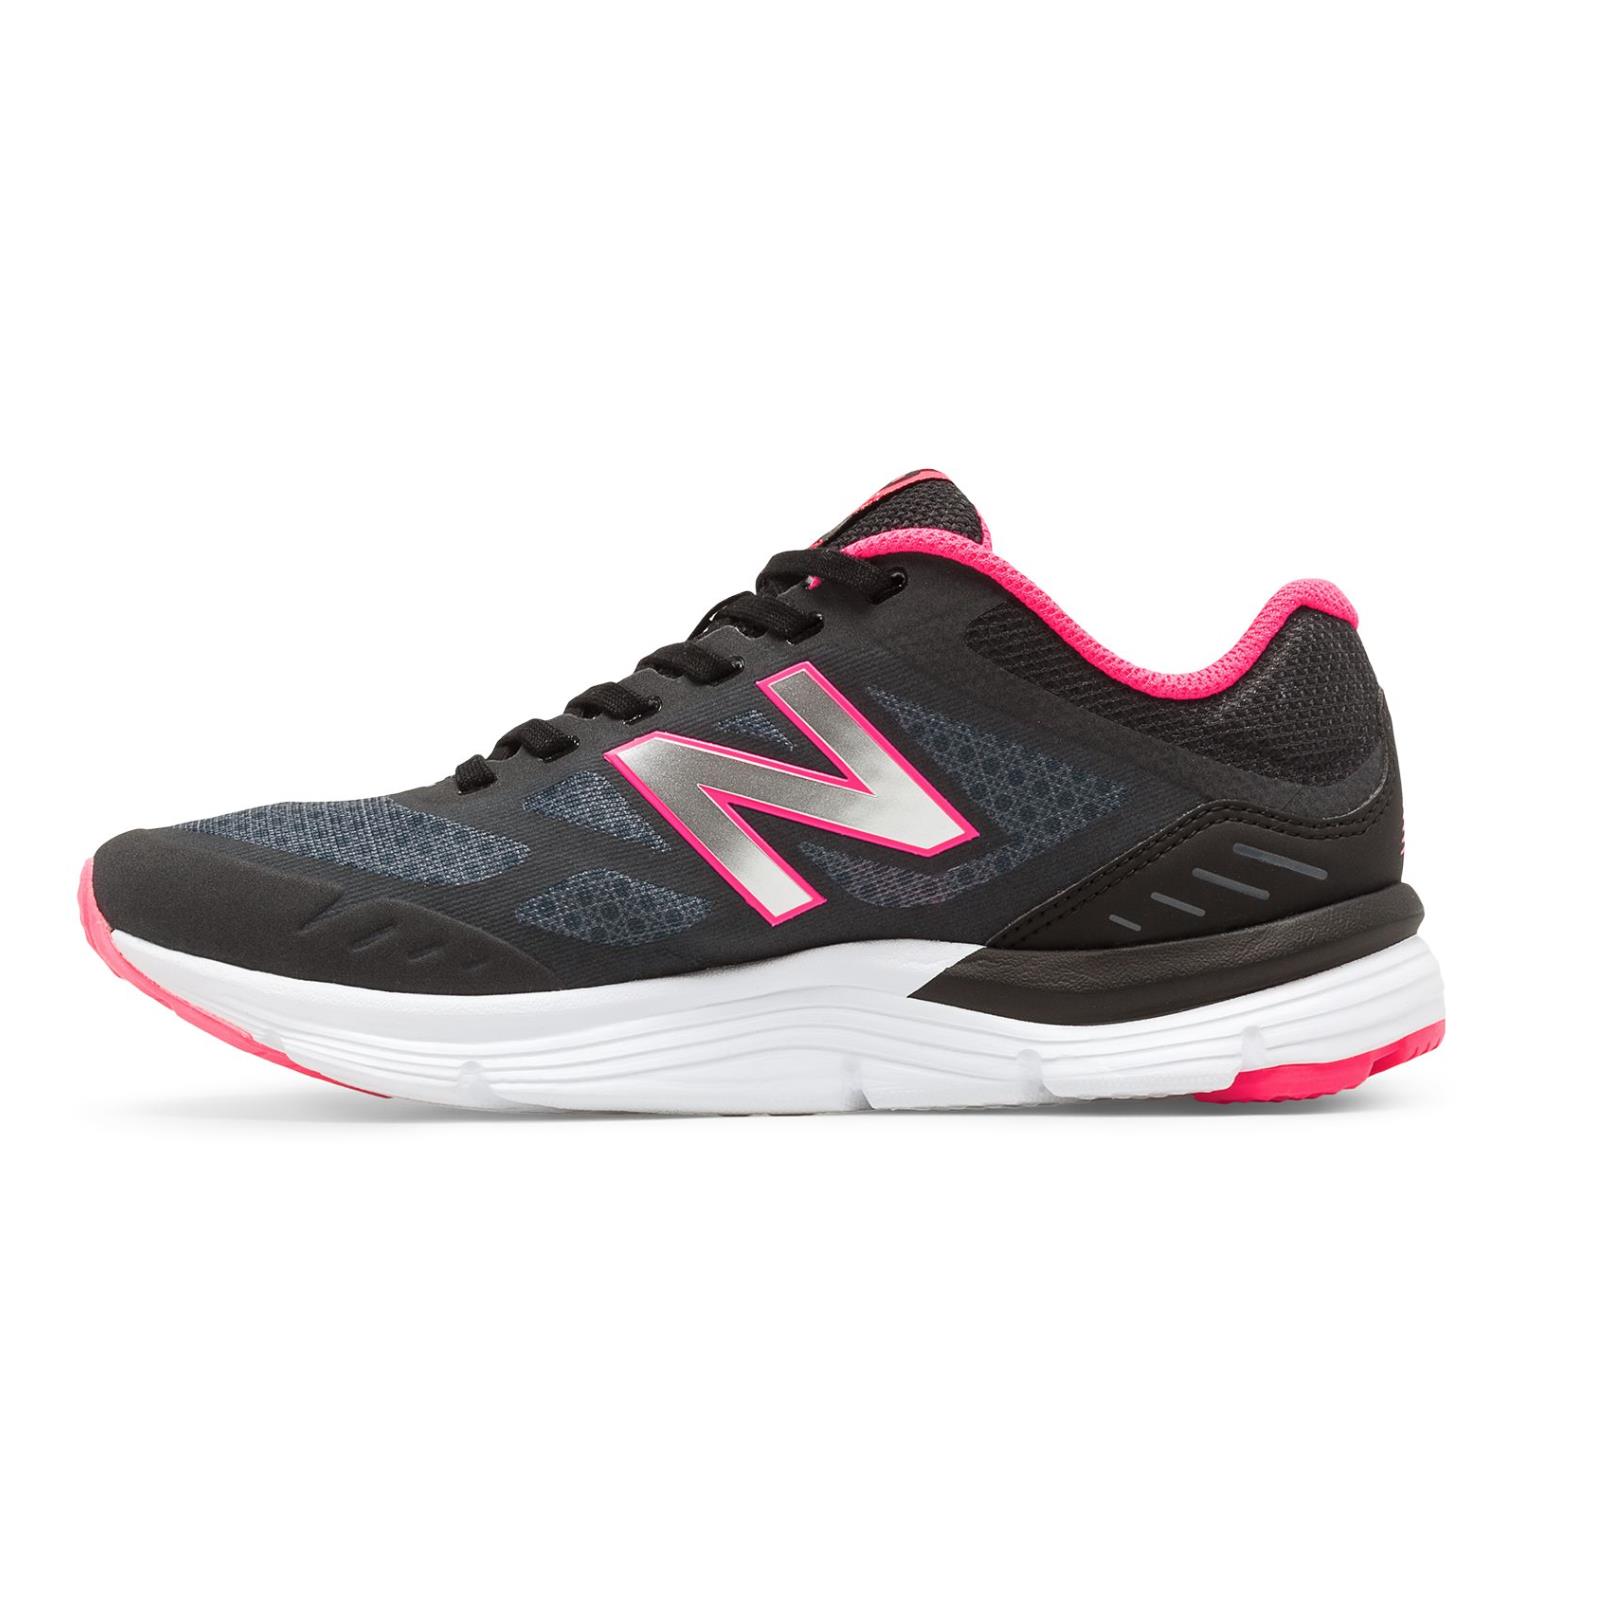 New Balance 775v3 Running Course Shoes Black Women Sz 7 D N4057